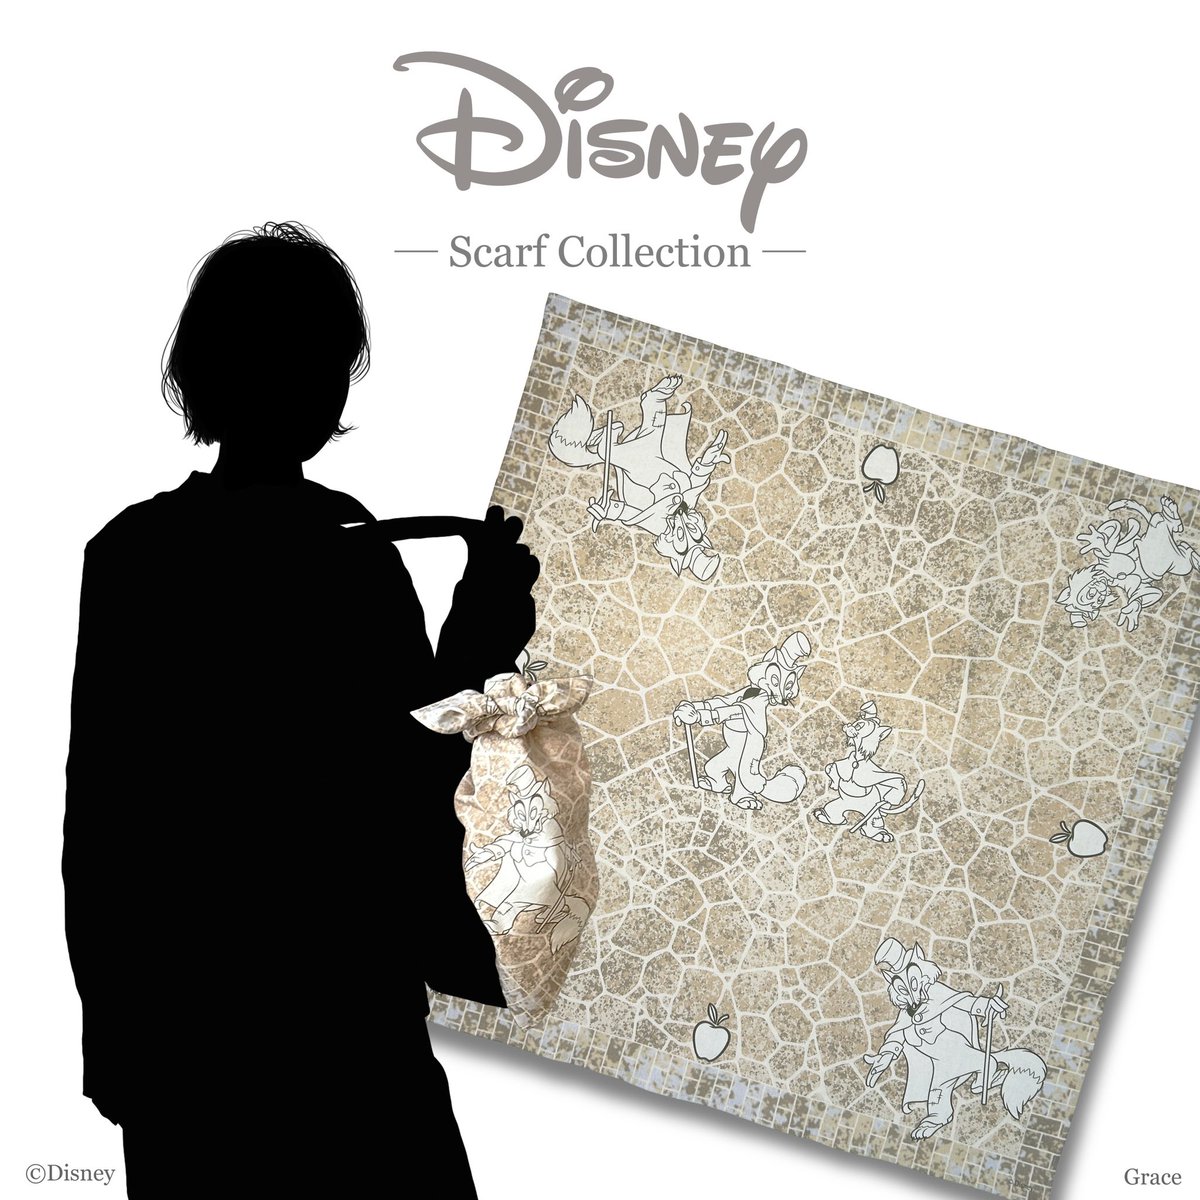 【<Disney>Scarf】
-Foulfellow&Gideon-

『ピノキオ』のファウルフェローとギデオンがレイアウトされたスカーフ❗️
石畳の道とレンガの壁をイメージした背景とセピアなカラーで、まるでレトロアニメーションを覗いているよう🎵

#ディズニー #Disney #ピノキオ #ファウルフェロー #ギデオン 